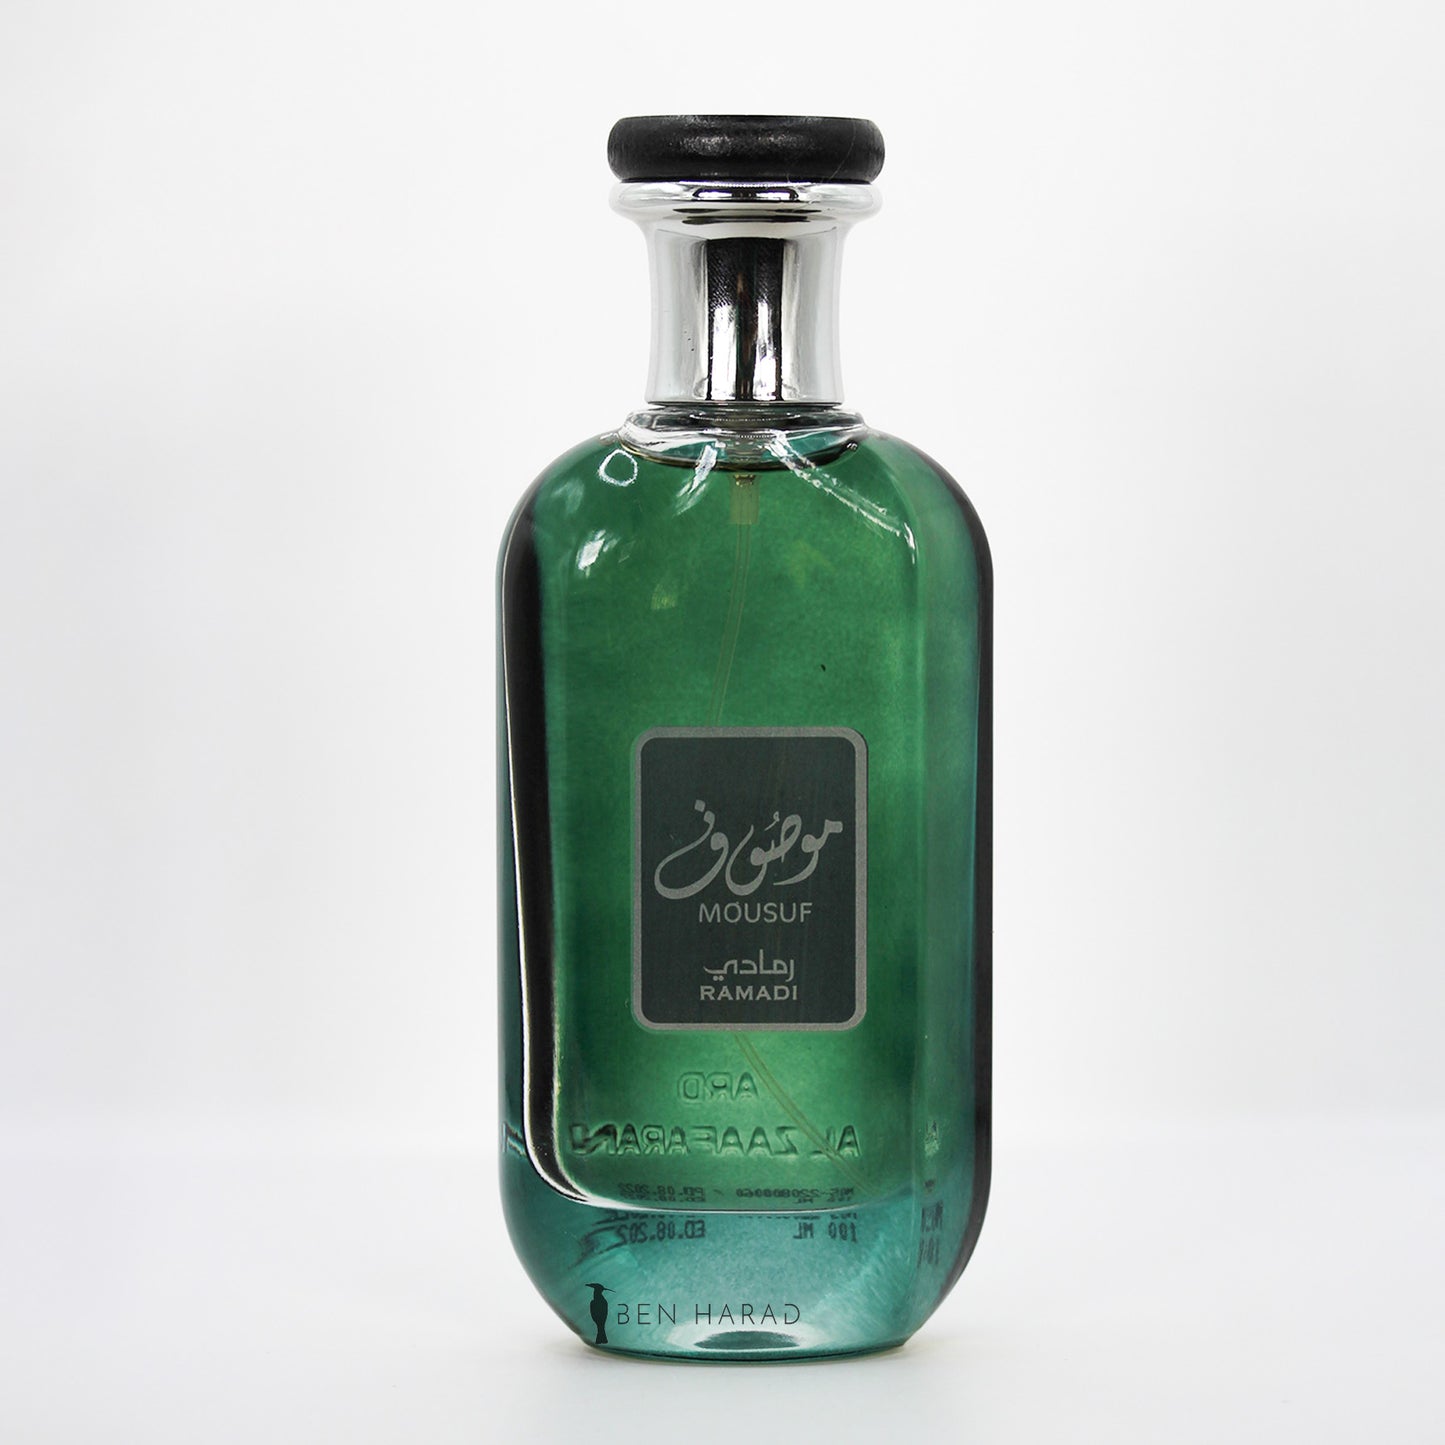 Mousuf silver perfume 100ml EDP